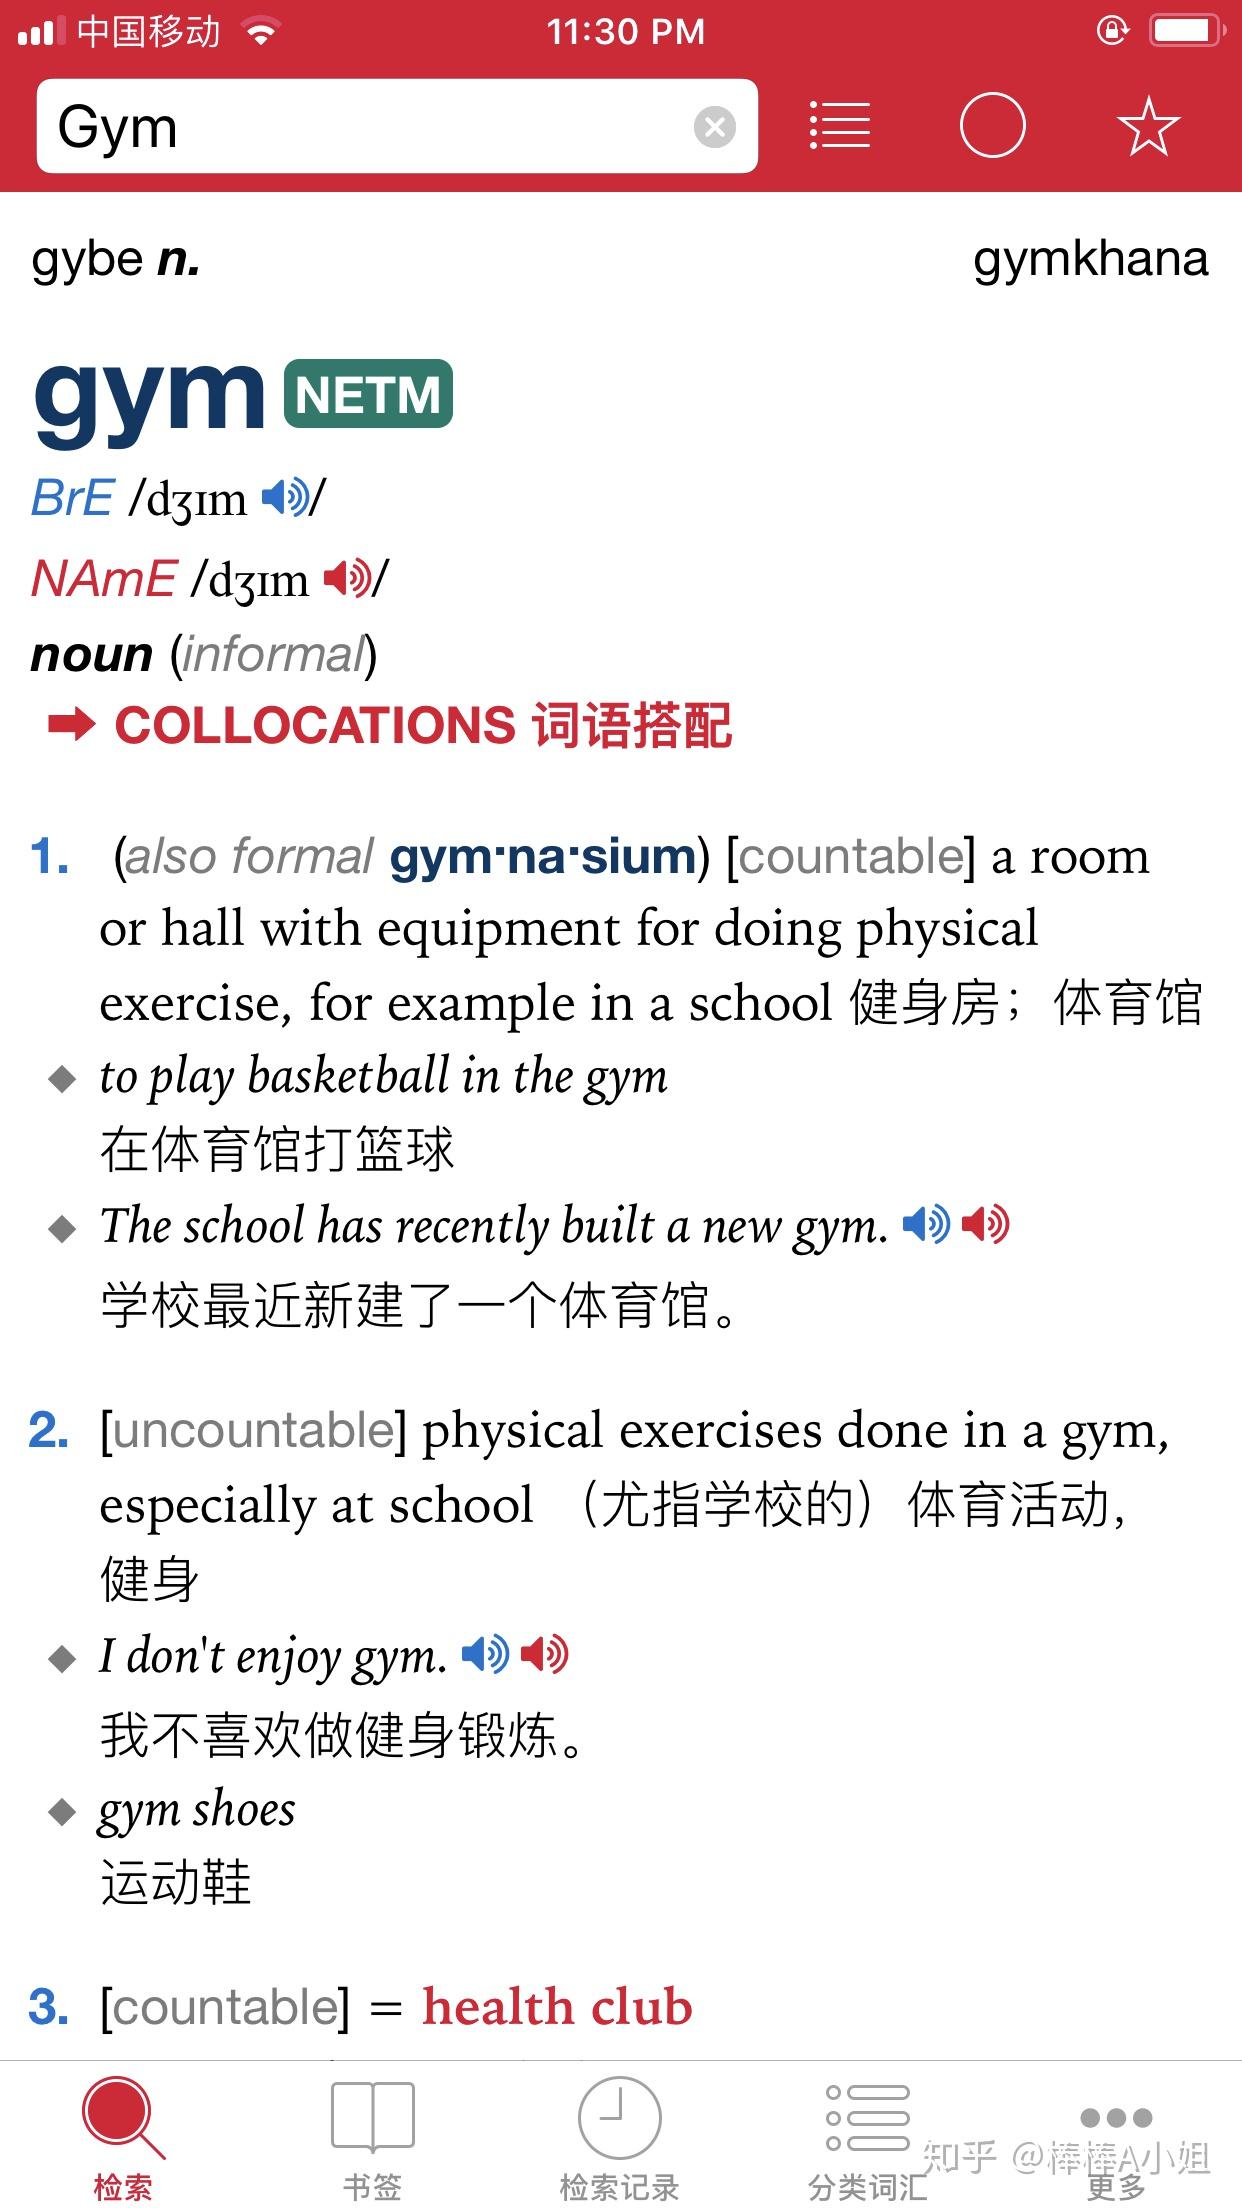 gym英文是什么意思?